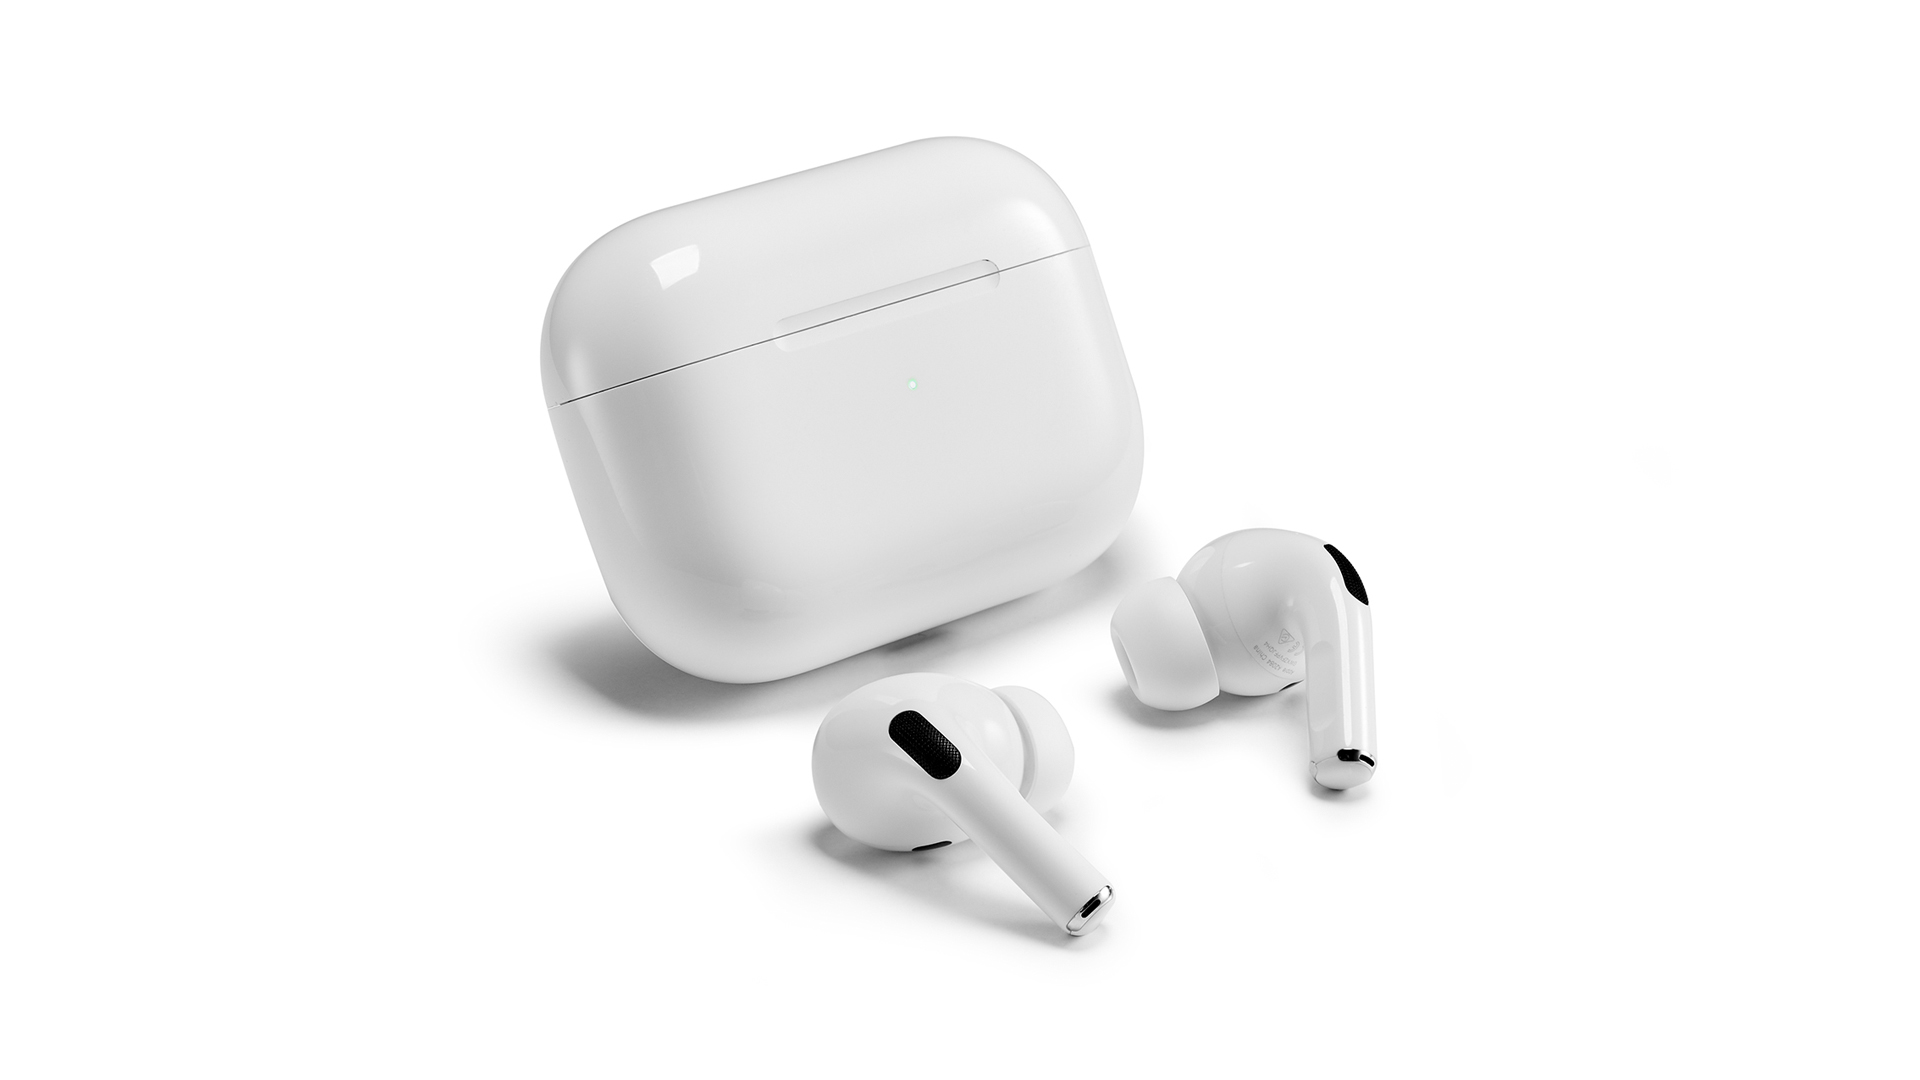 Earbud Nirkabel : Apple AirPods Pro | What HI-FI?